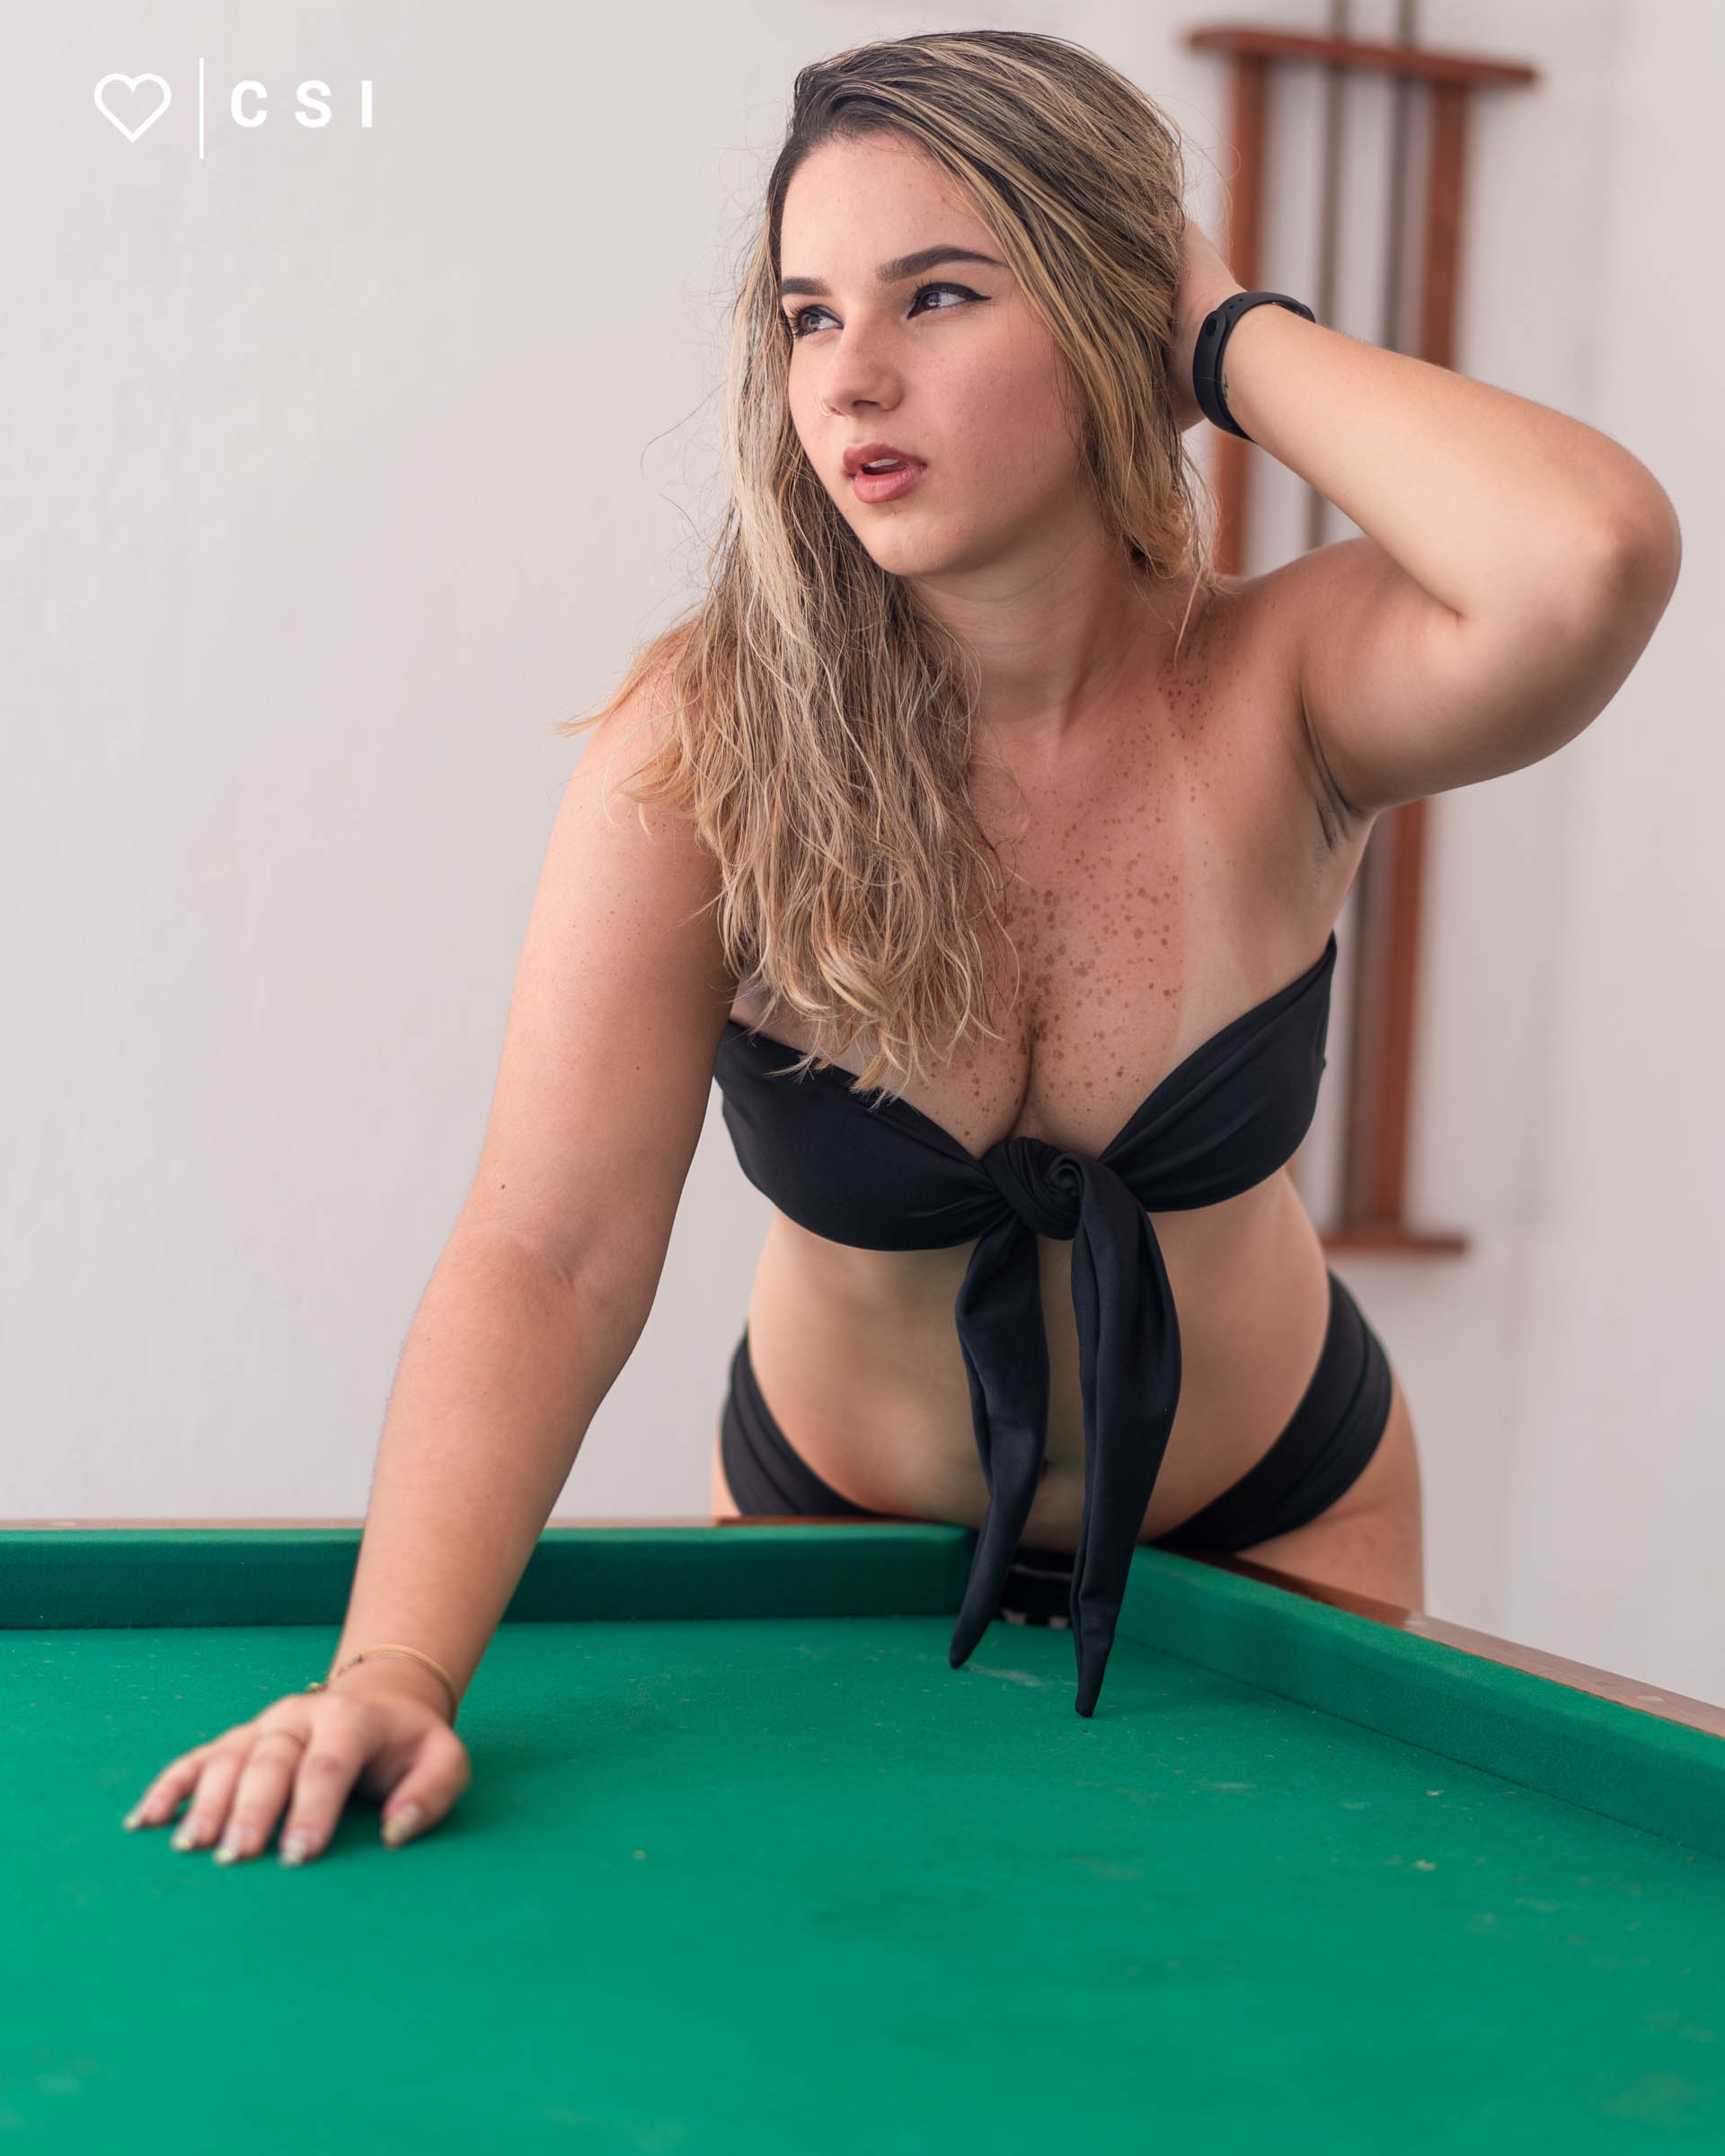 modelo em ensaio fotografico sensual com look preto e escarpin salto fino na mesa de sinuca verde